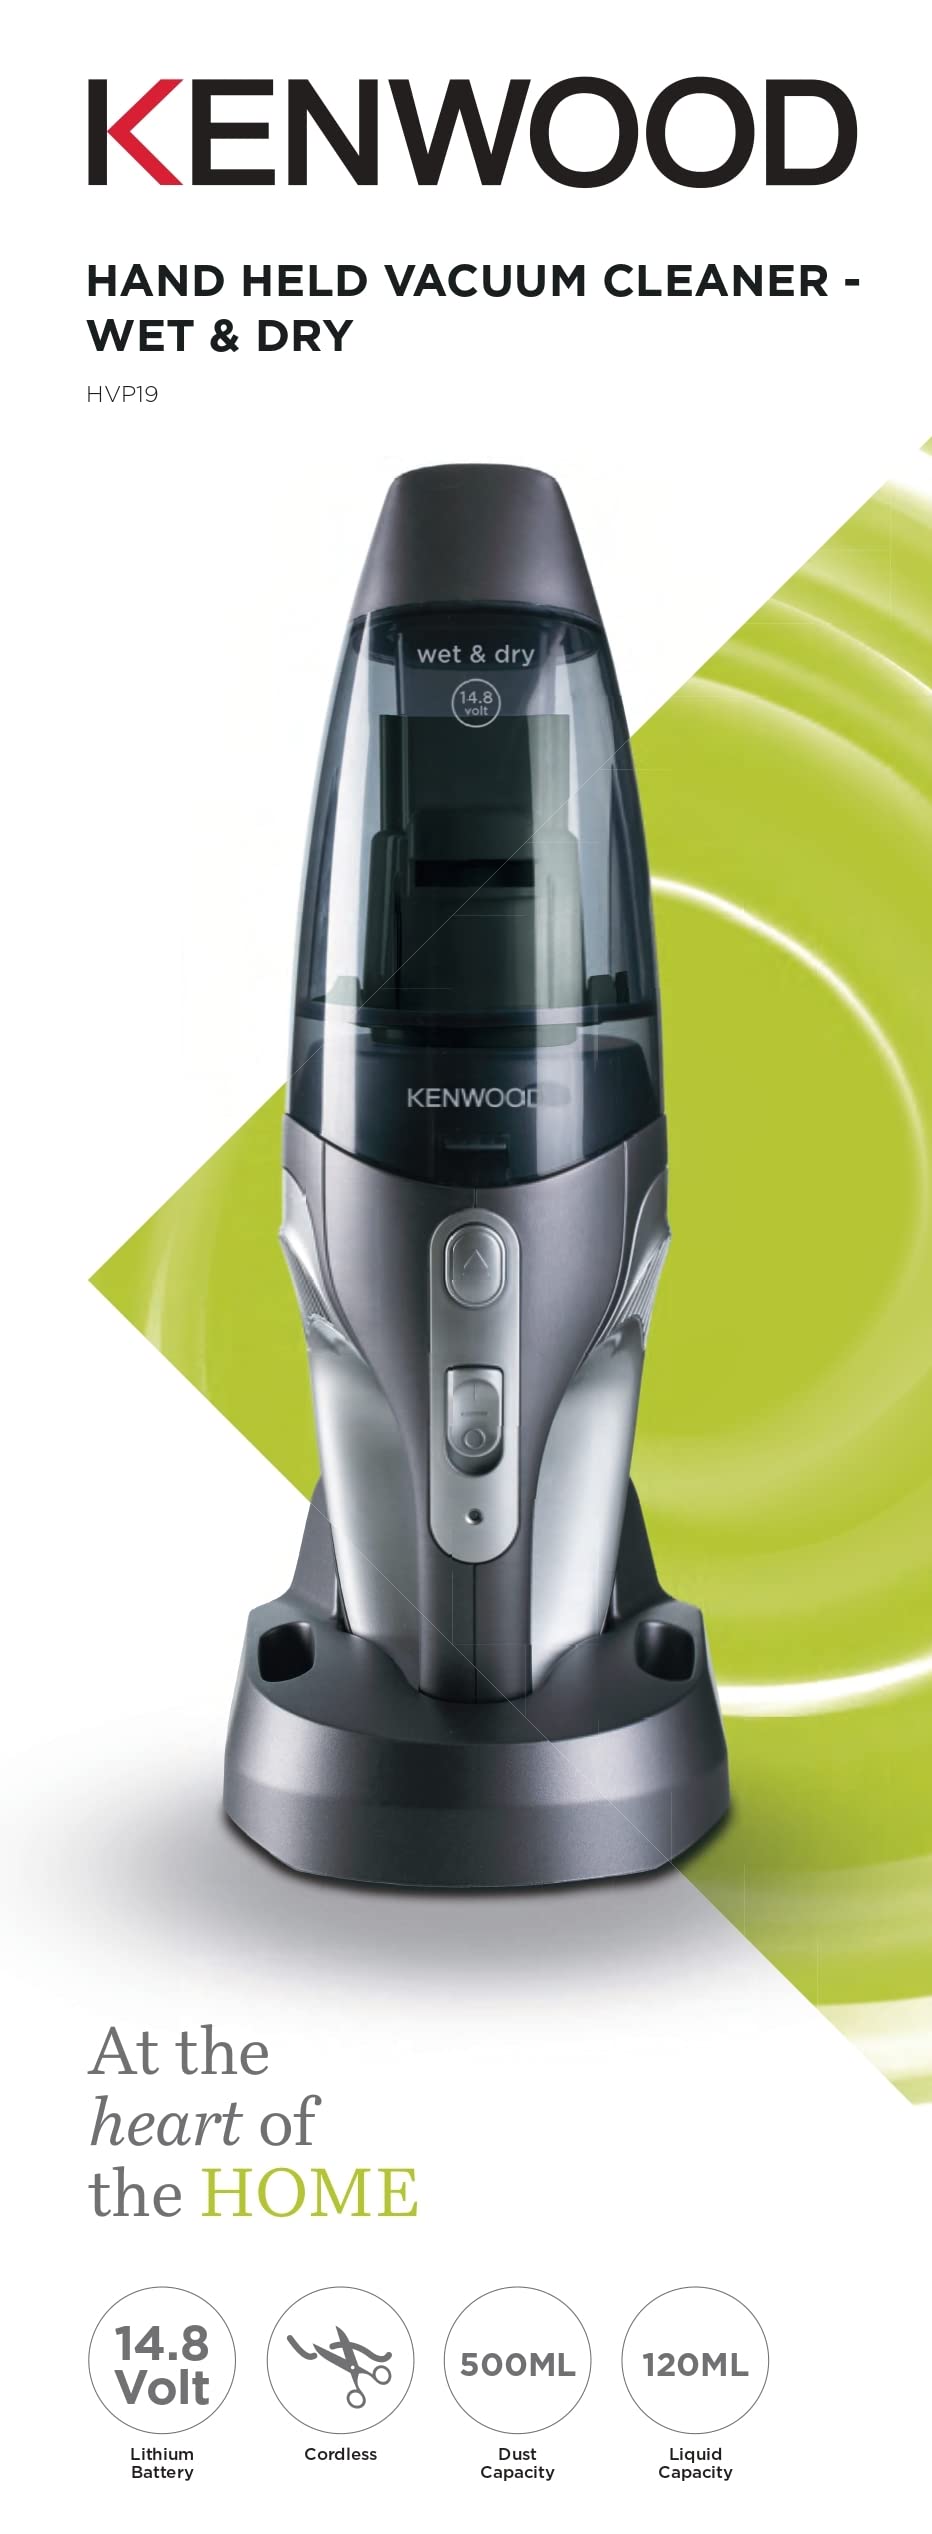 Kenwood Wet & Dry Cordless Handheld Vacuum Cleaner With 14.8V Lithium-Ion Battery, 500ml Dust Capacity  مكنسة كهربائية لاسلكية محمولة باليد لتشغيل رطب وجاف مع بطارية ليثيوم ايون بقدرة 14.8 فولت،